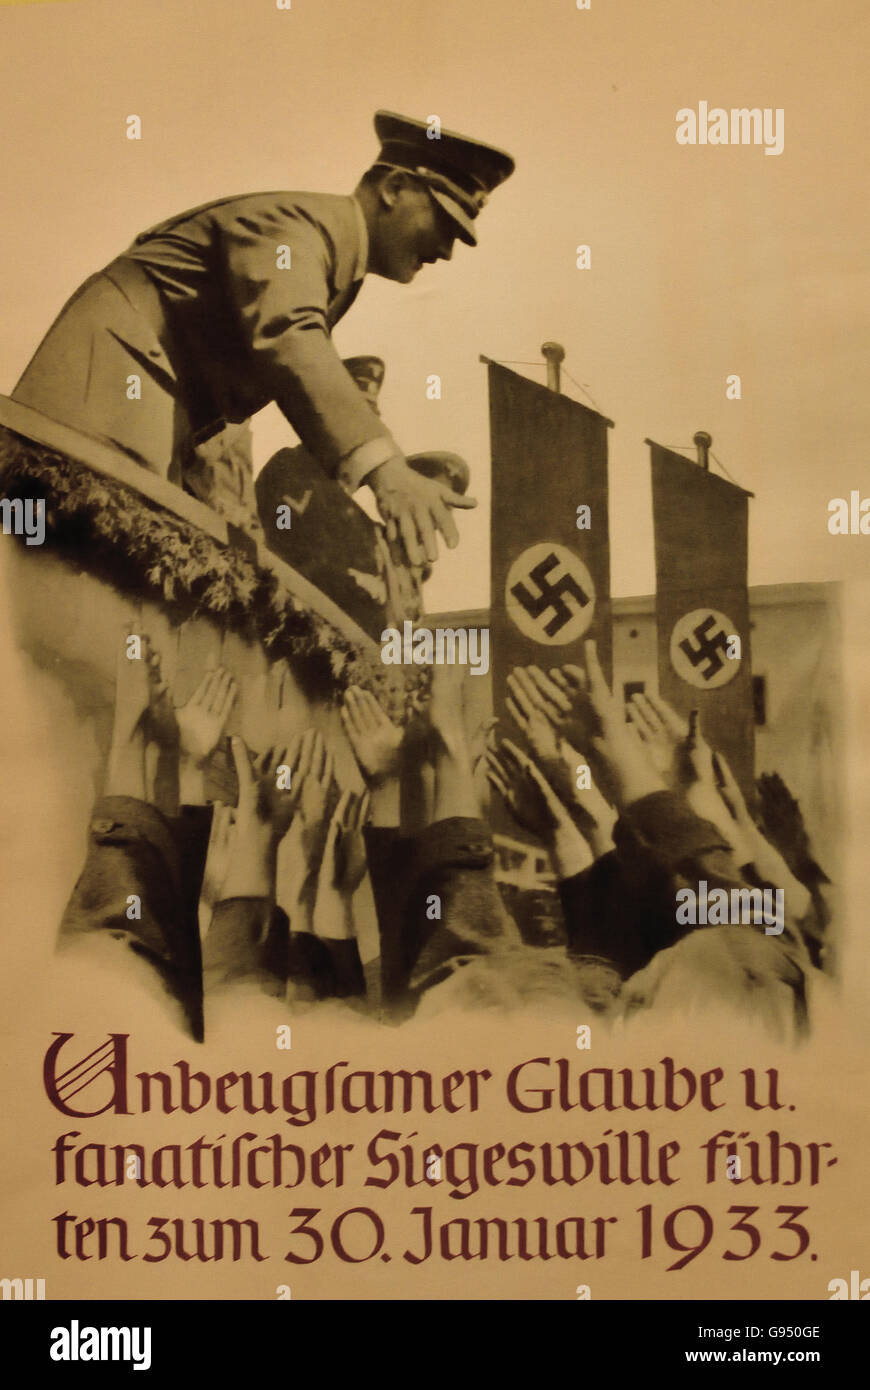 Unbeugsamer Glaube und. fanatischer Siegeswille führten 30 Januar 1933 fede inflessibile e. fanatica volontà di vincere il led 30 Gennaio 1933 Berlino Germania nazista Foto Stock